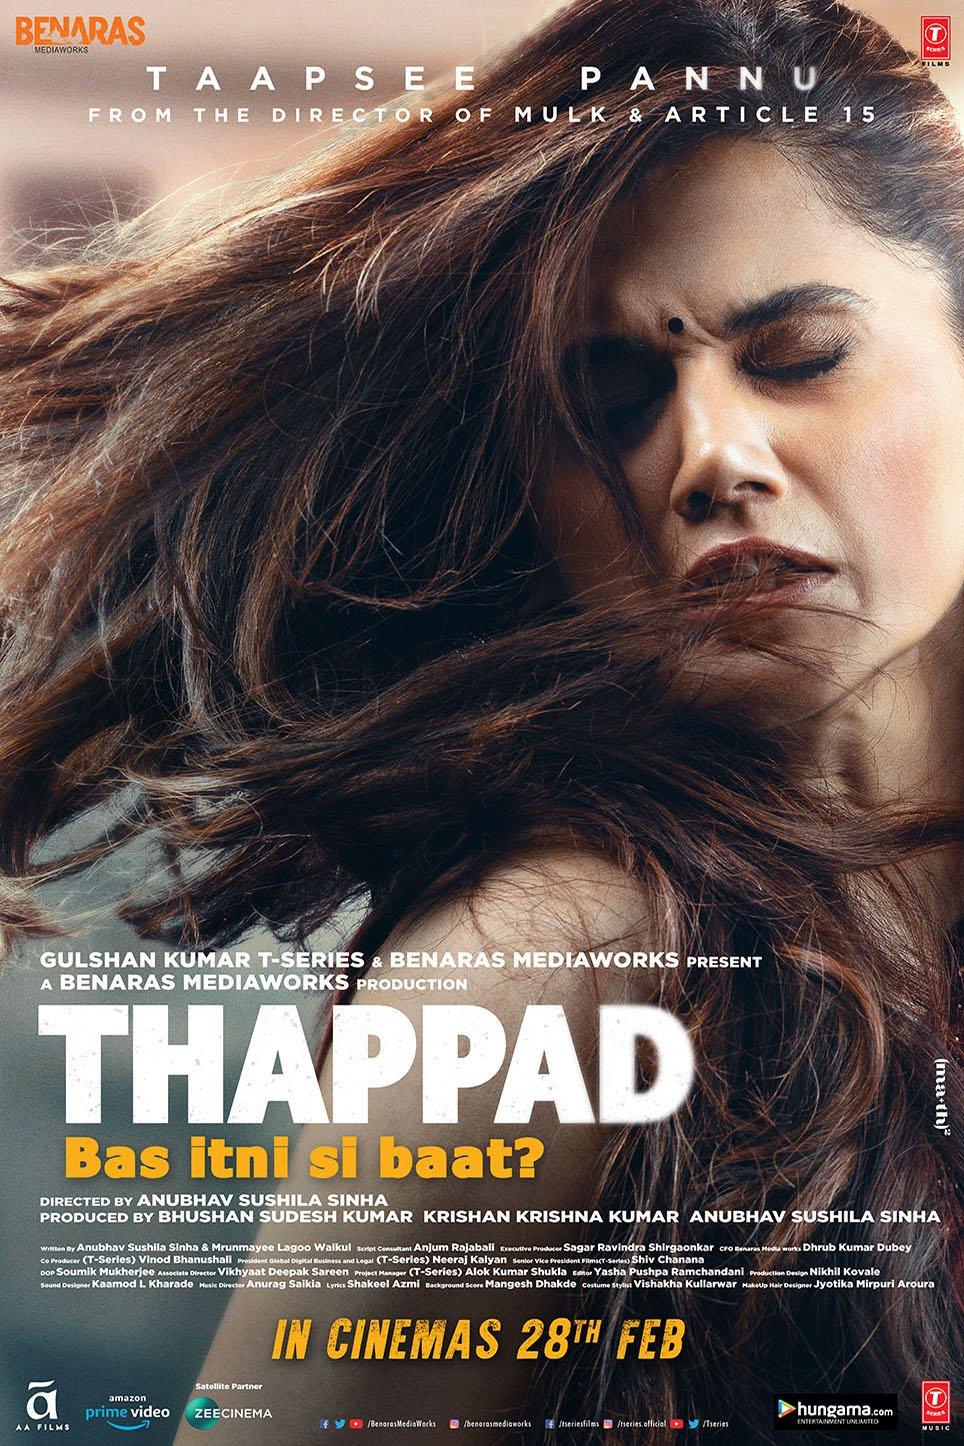 #14: Thappad